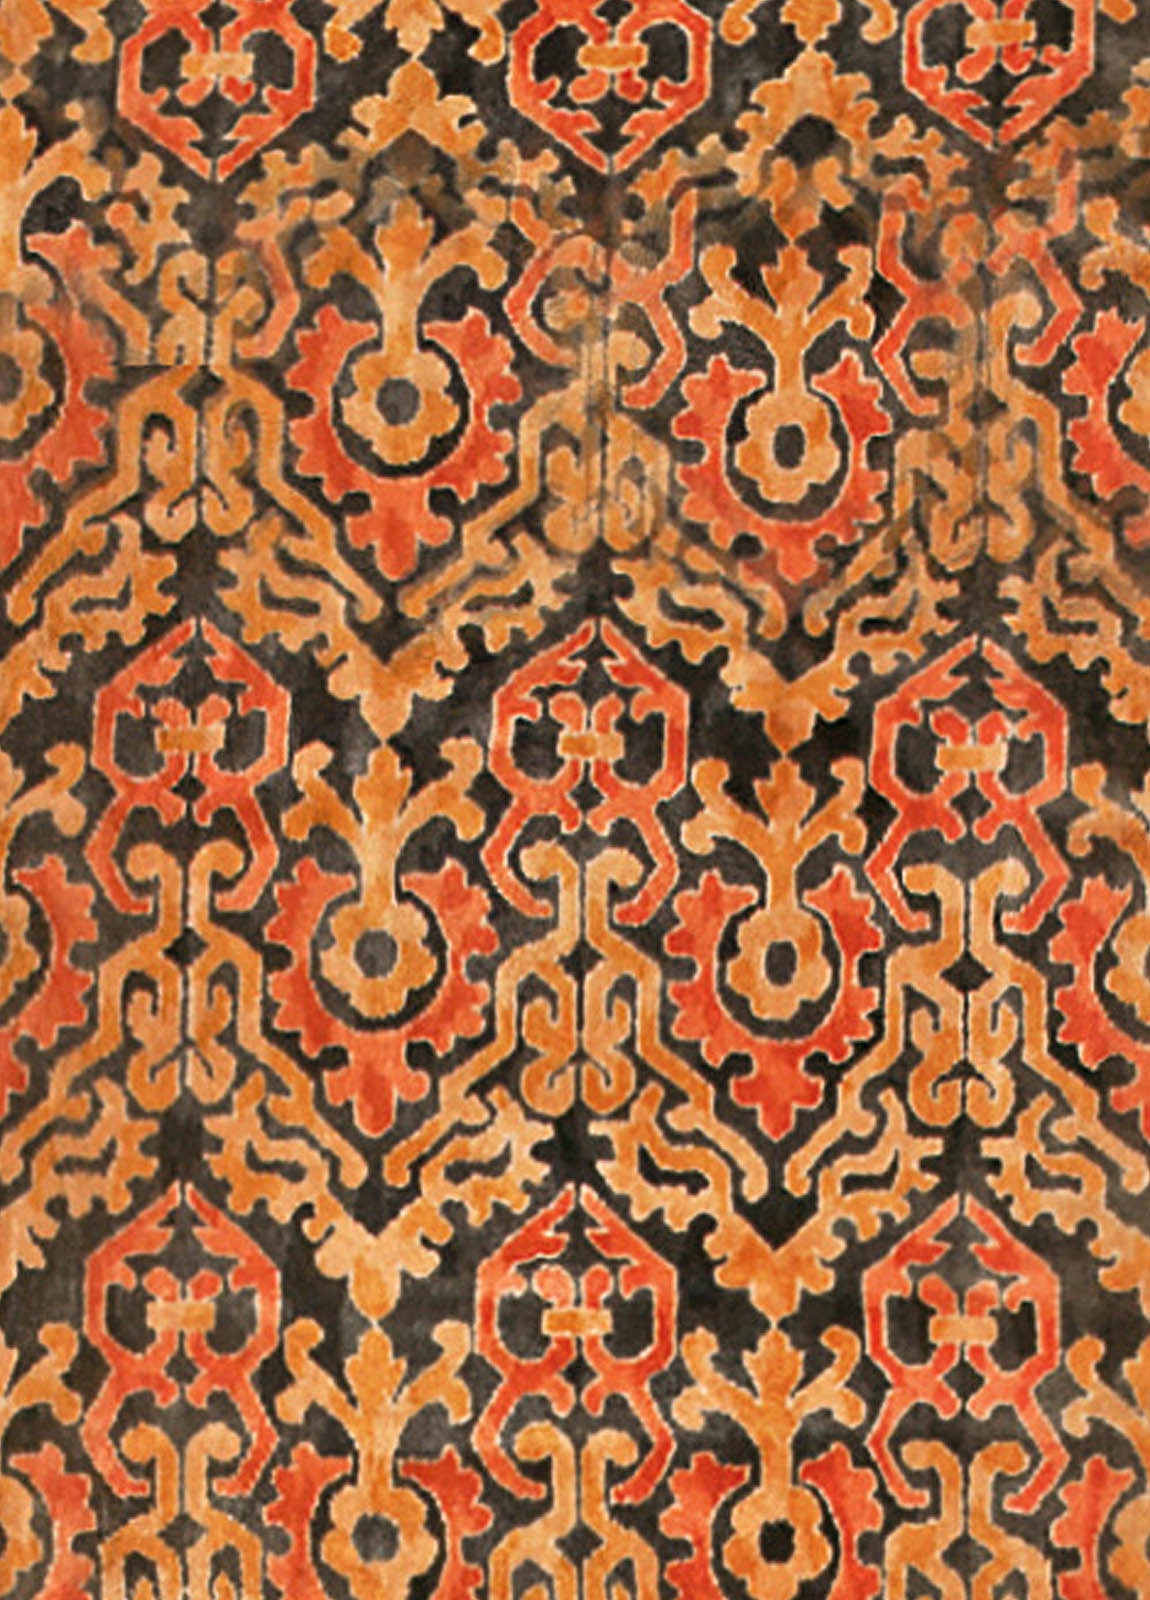 One-of-a-kind Oversized vintage Spanish rug (Size Adjusted)
Size: 15'1